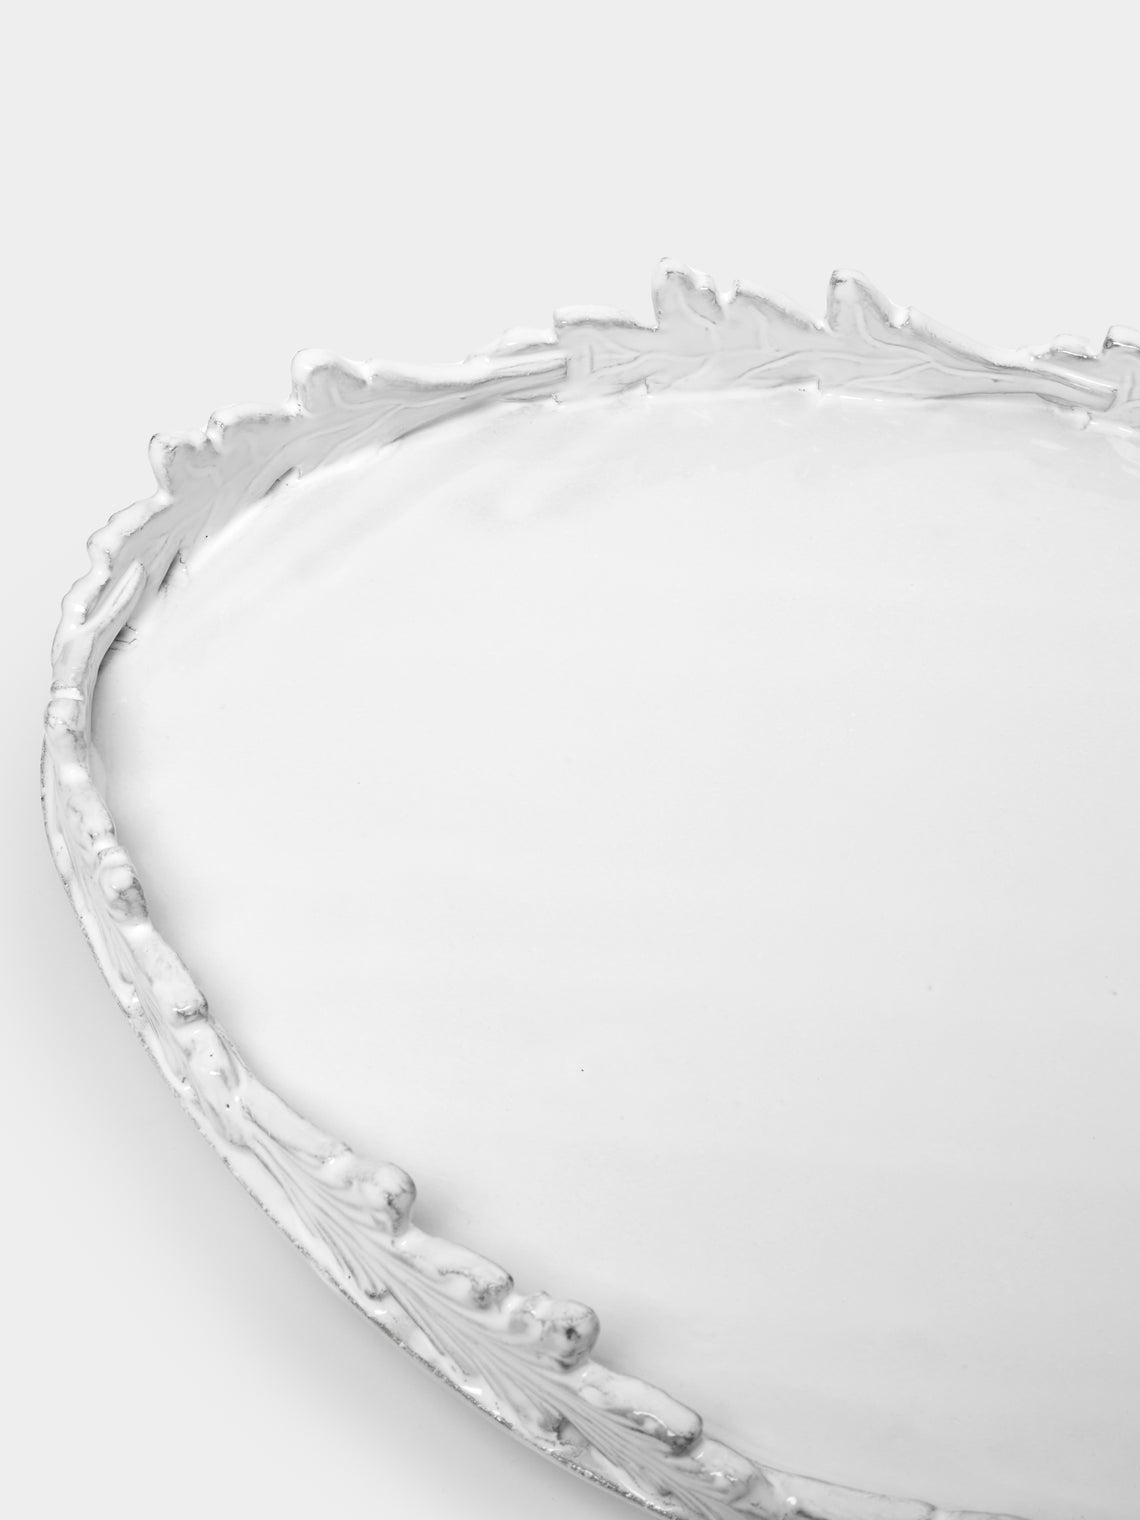 Astier de Villatte - Large Oval Footed Platter with Leaves -  - ABASK